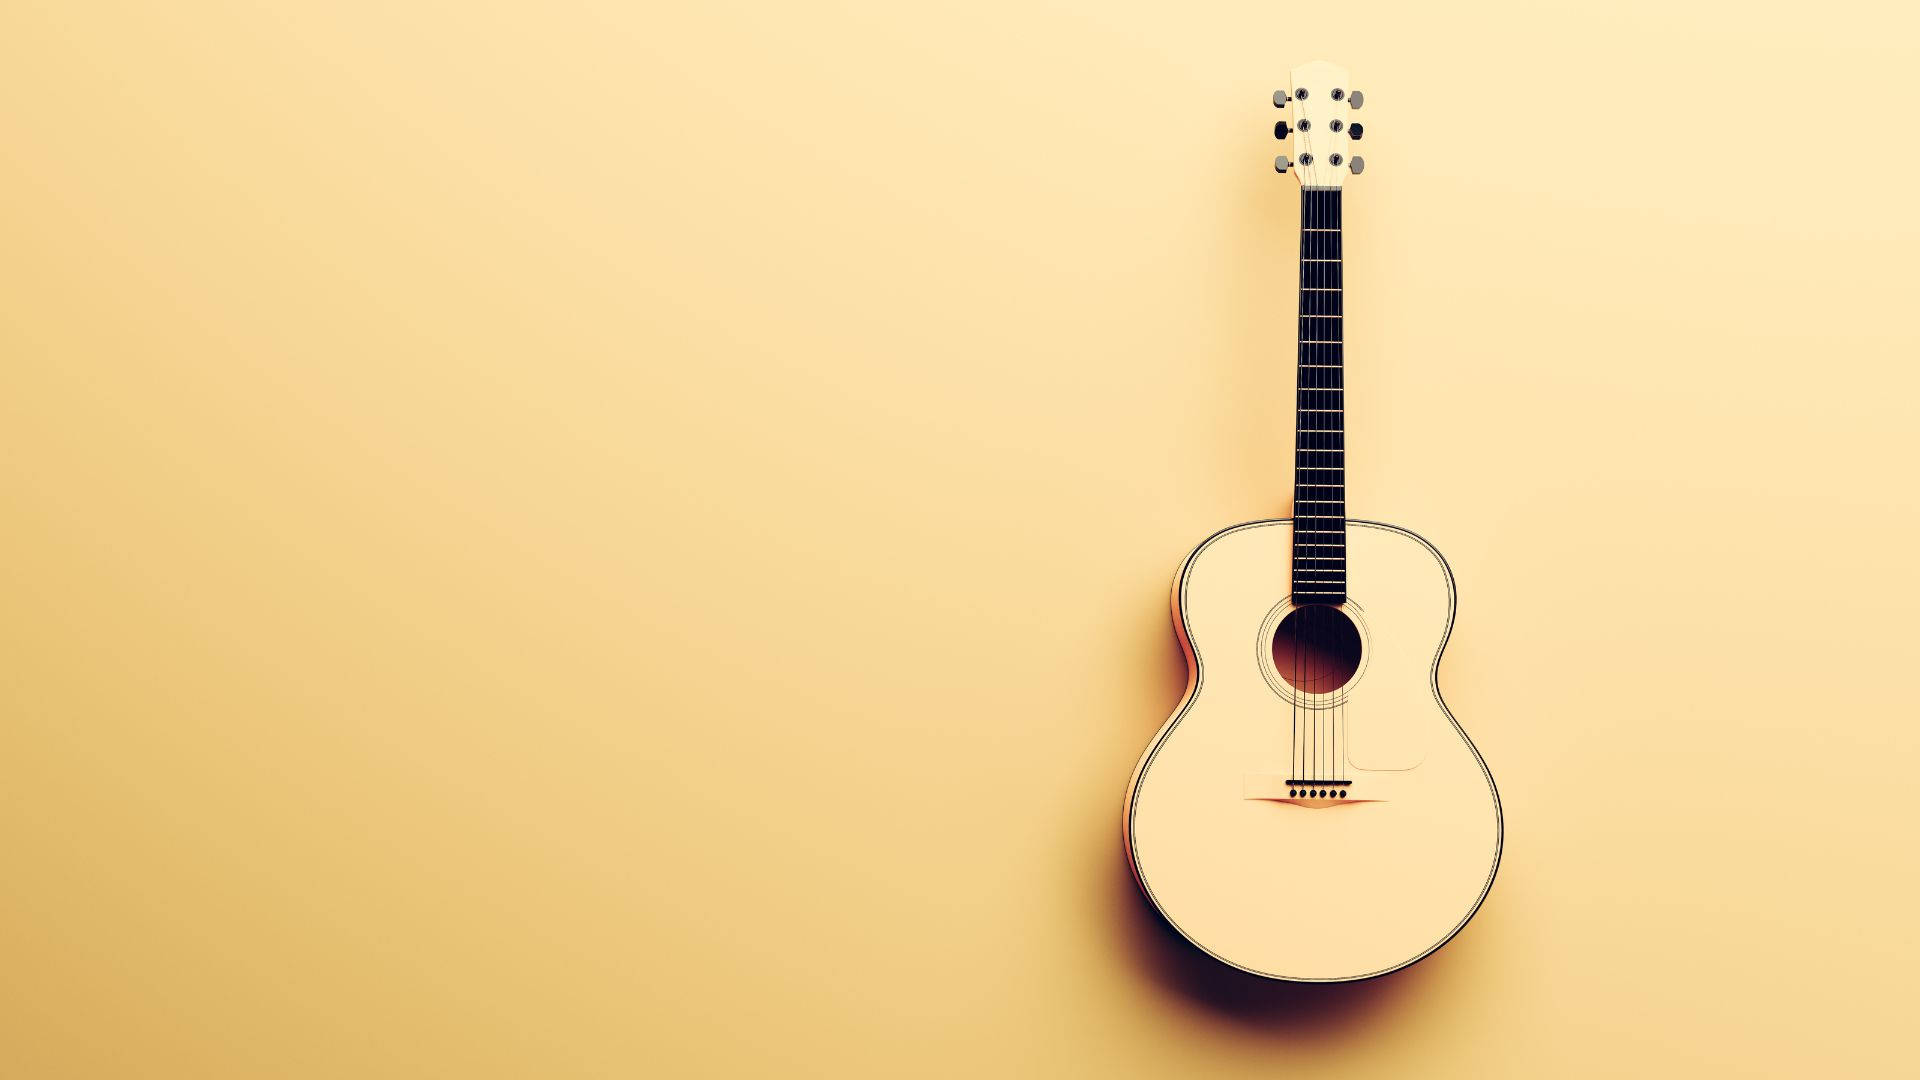 Free Acoustic Guitar Wallpaper Downloads, [100+] Acoustic Guitar Wallpapers  for FREE 